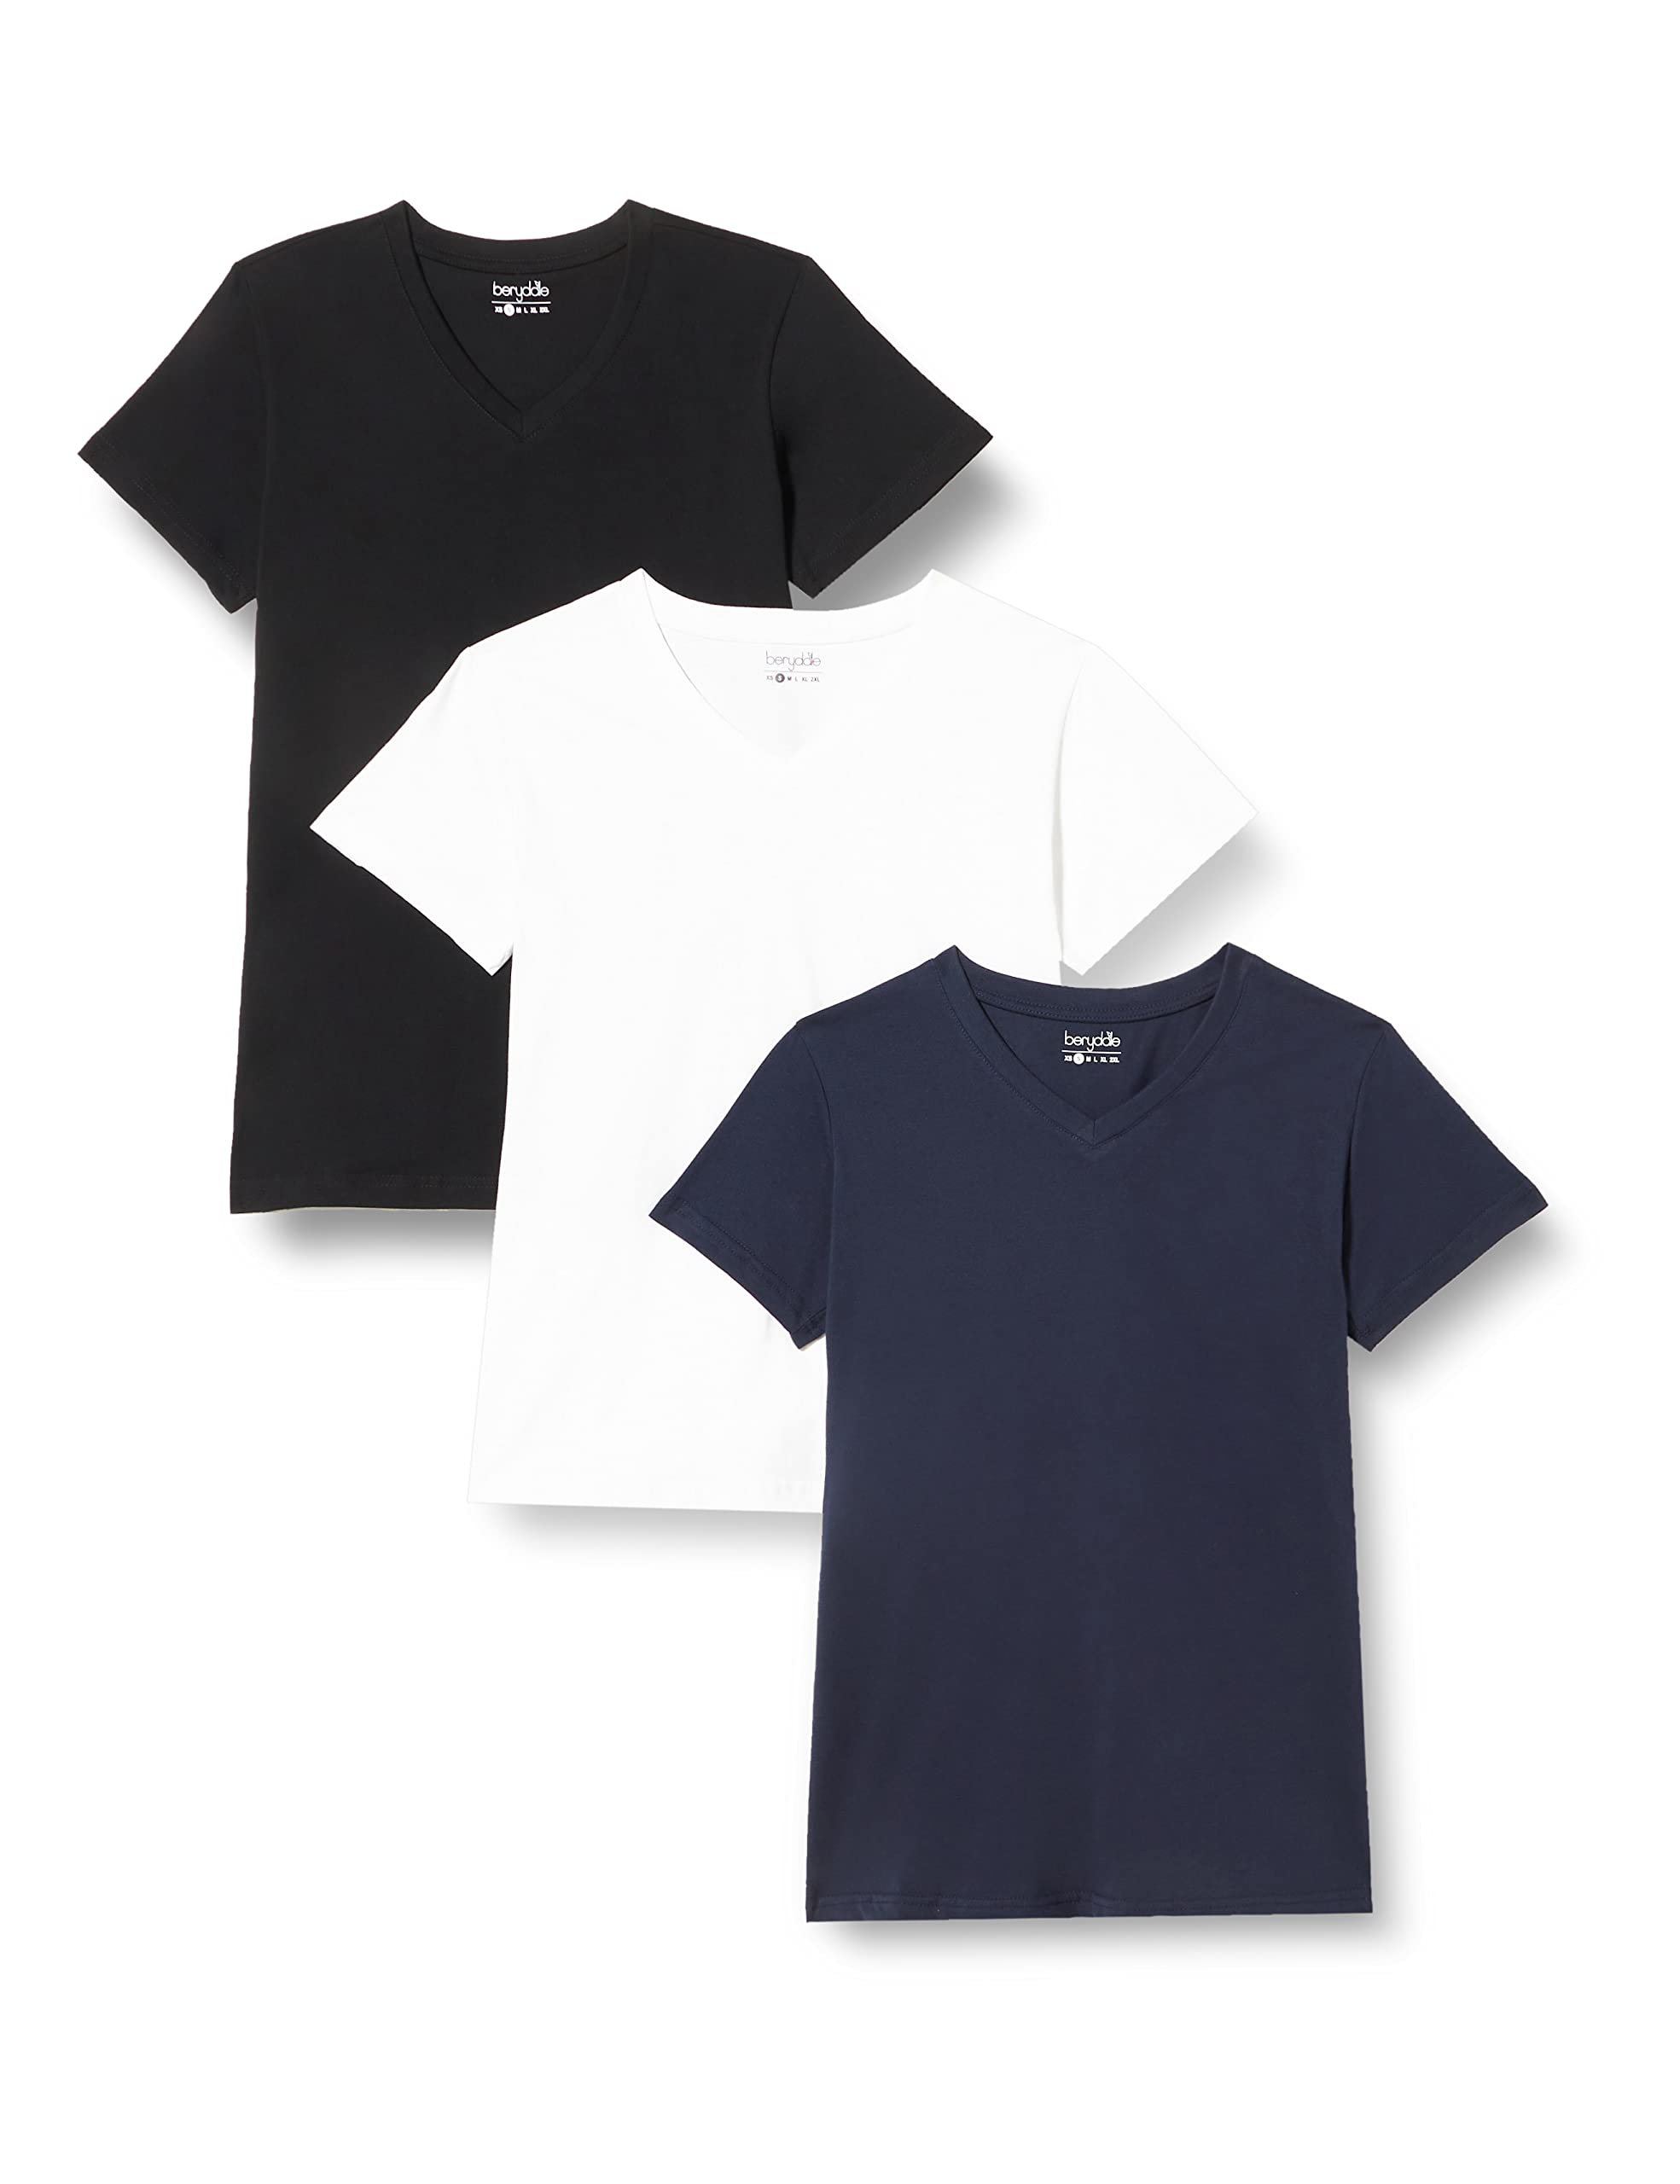 berydale Damen T-Shirt Bd158, Weiß/Dunkelblau/Schwarz - 3er Pack, XS